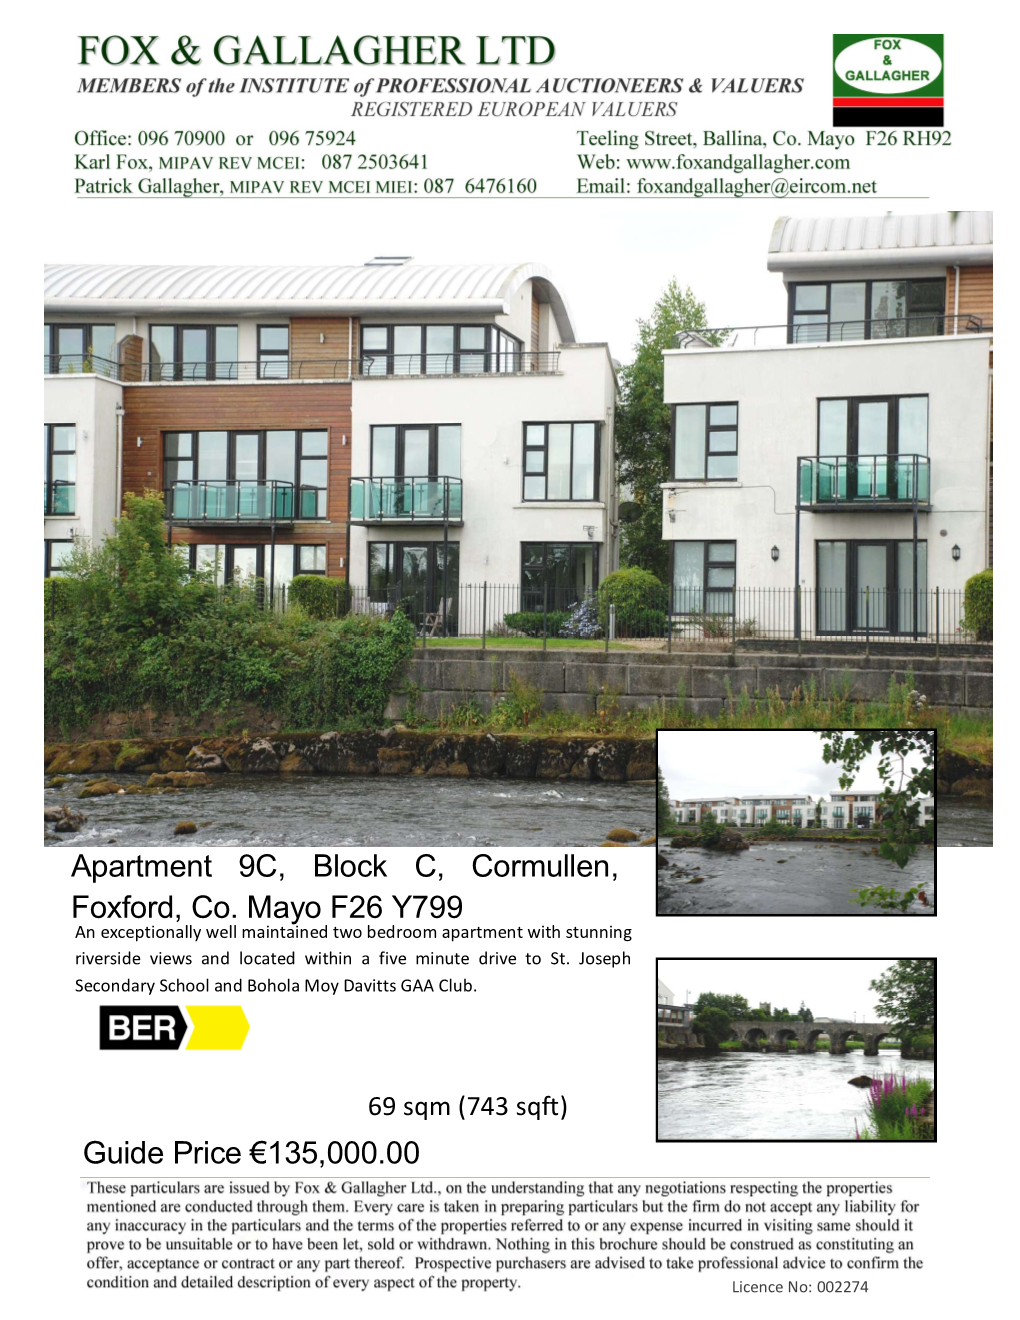 Guide Price €135,000.00 Apartment 9C, Block C, Cormullen, Foxford, Co. Mayo F26 Y799